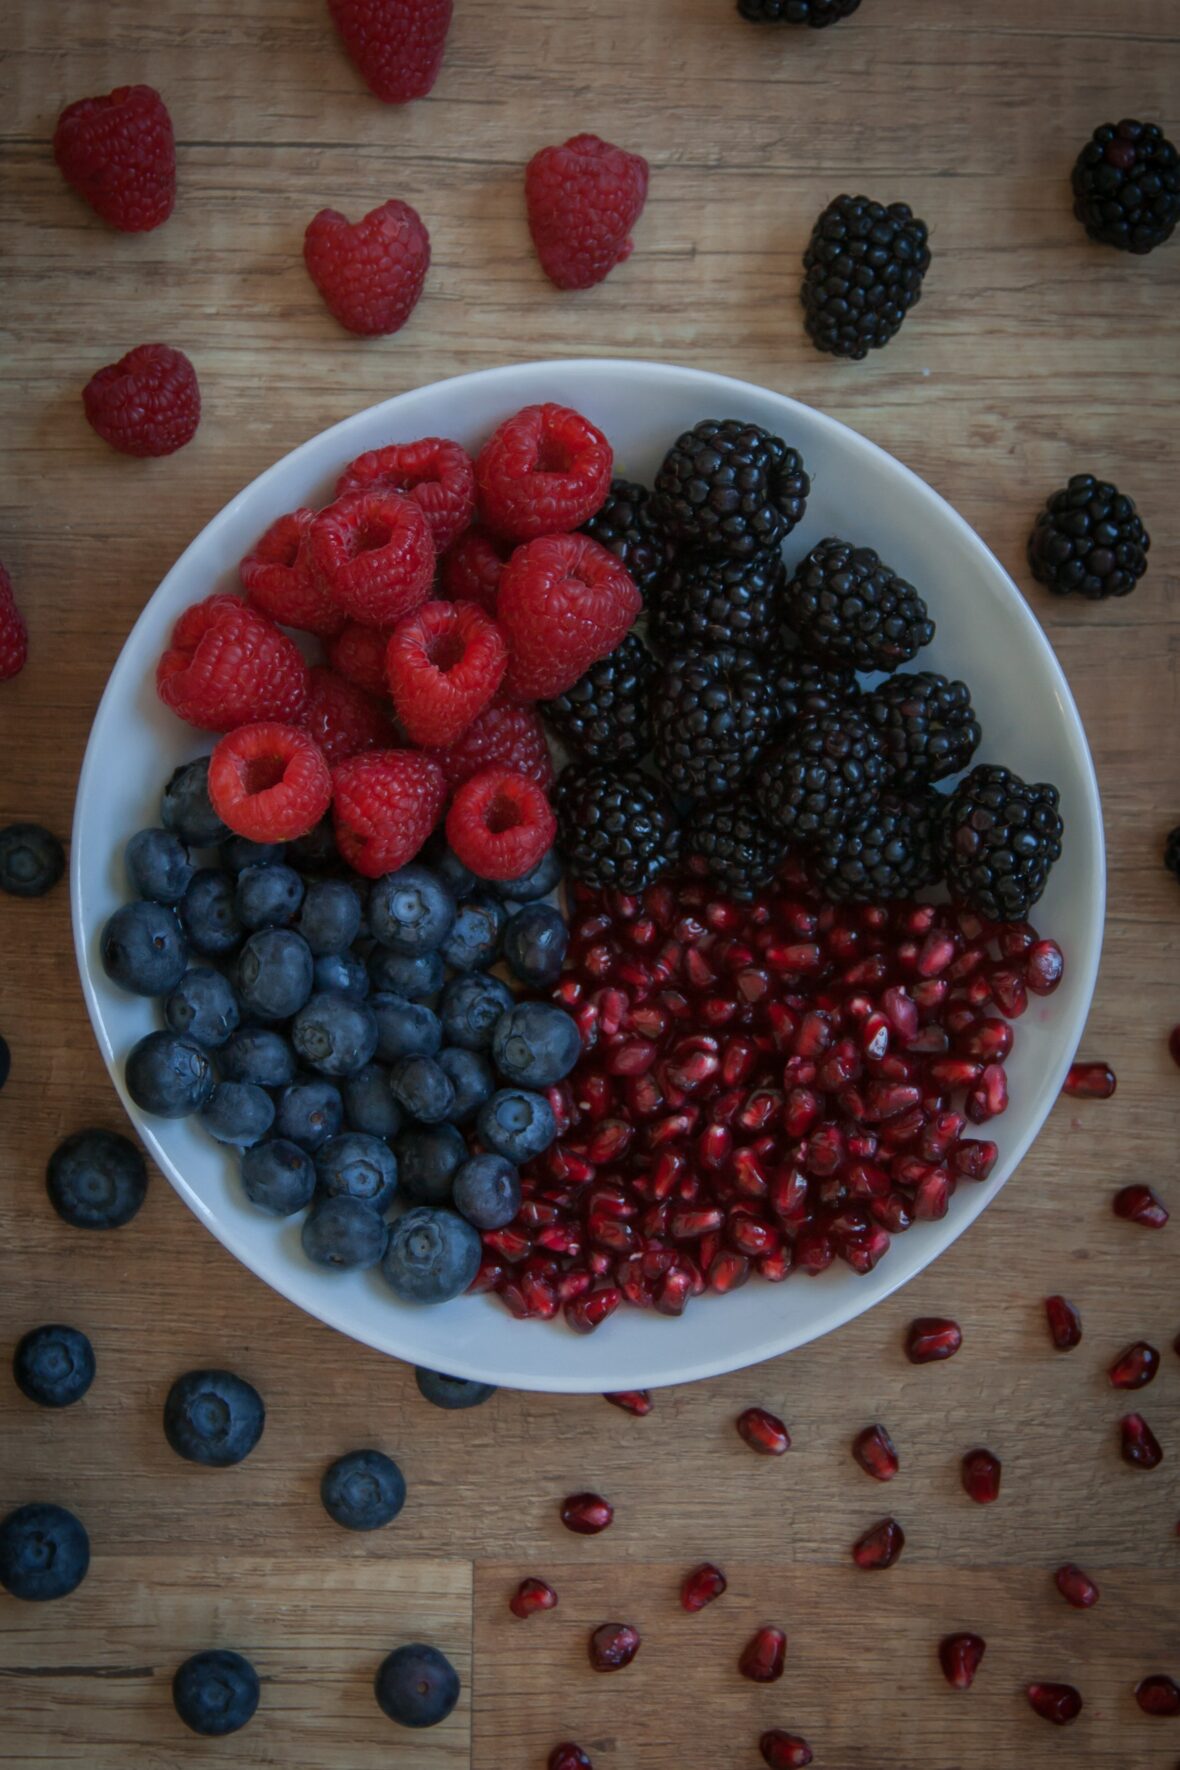 tips for healthy living all summer: eat fresh berries